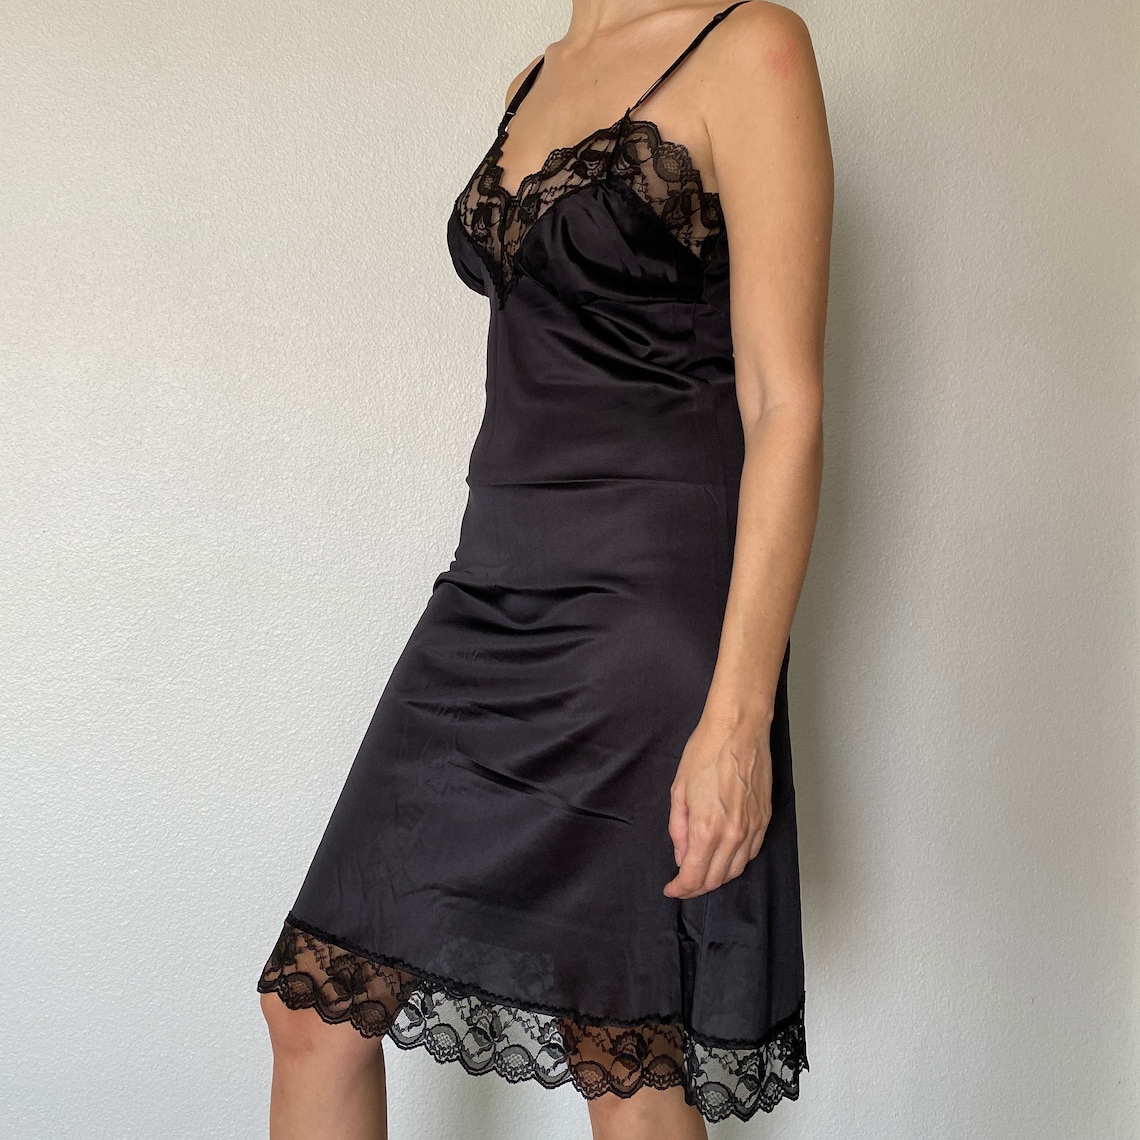 Vintage Black Nylon Lace Slip Dress Lingerie Nightie Medium | Etsy